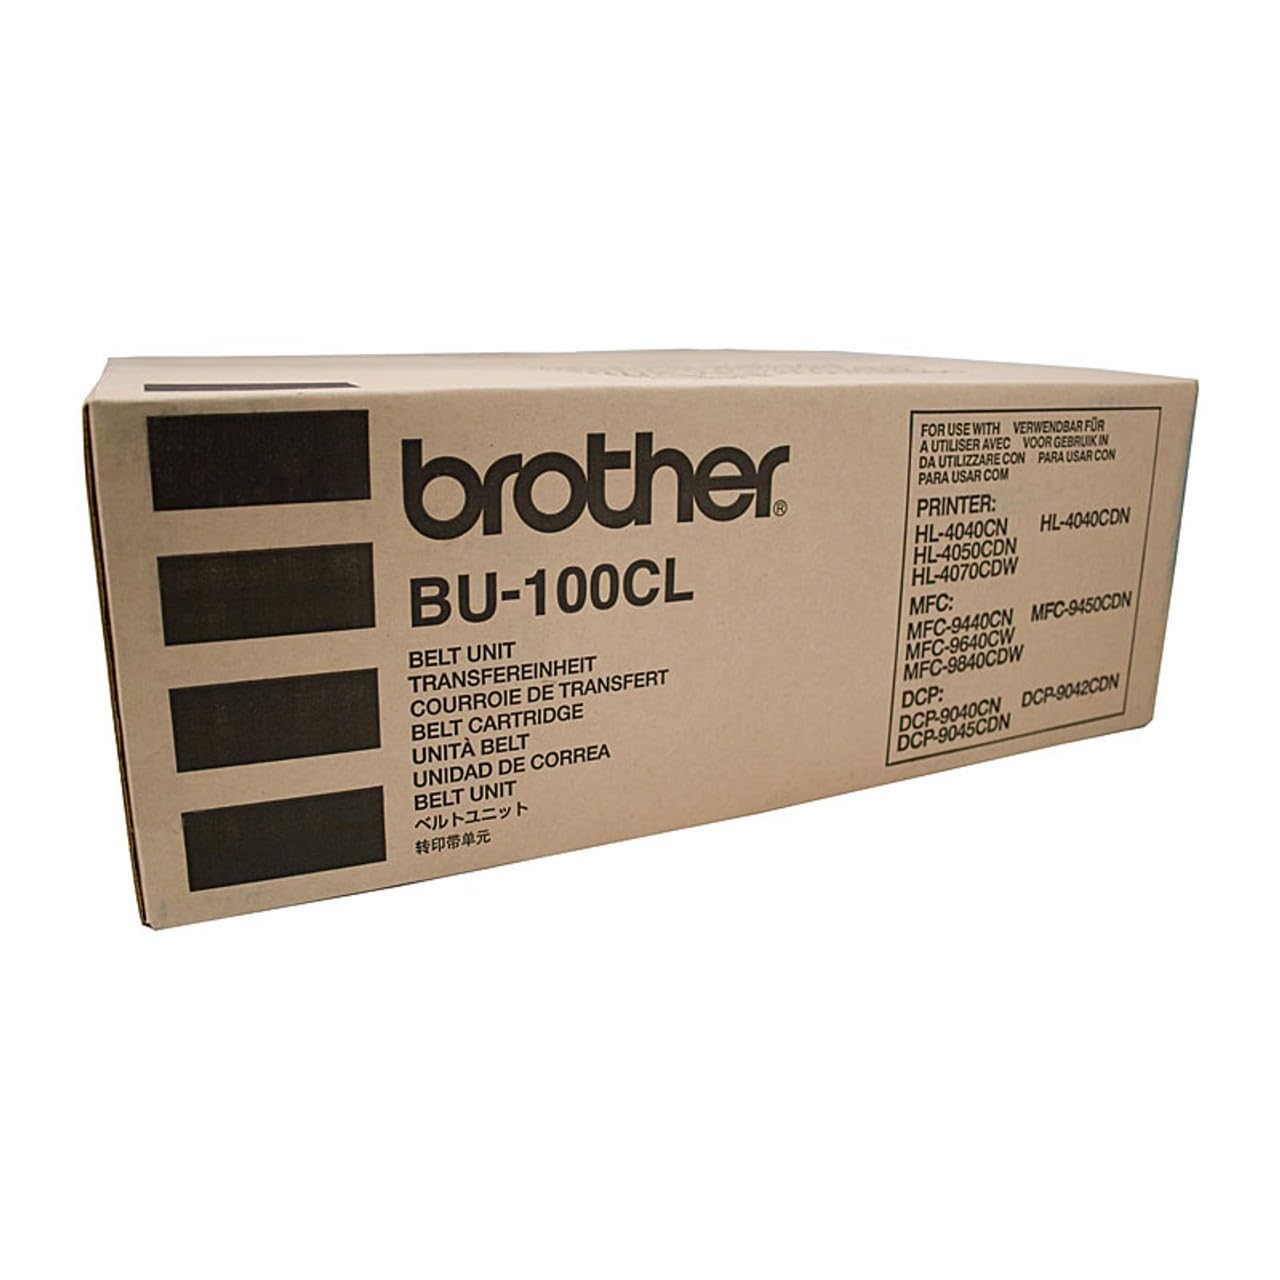 Brother BRTBU100CL Transfer Belt Kit for Printers, BLACK